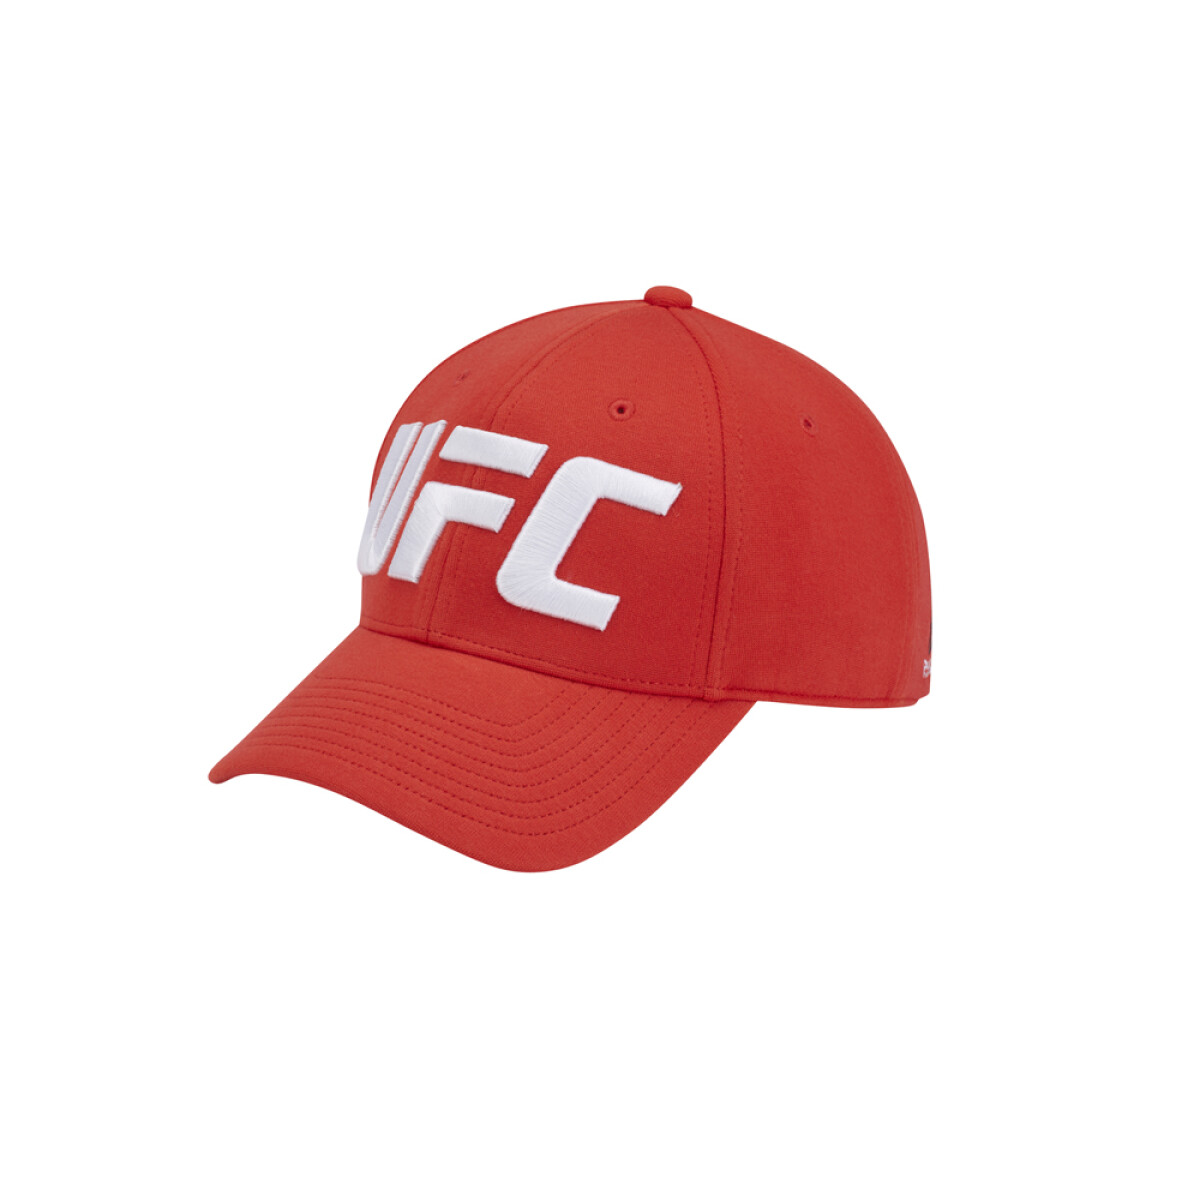 UFC BASEBALL CAP (LOGO) - Red 